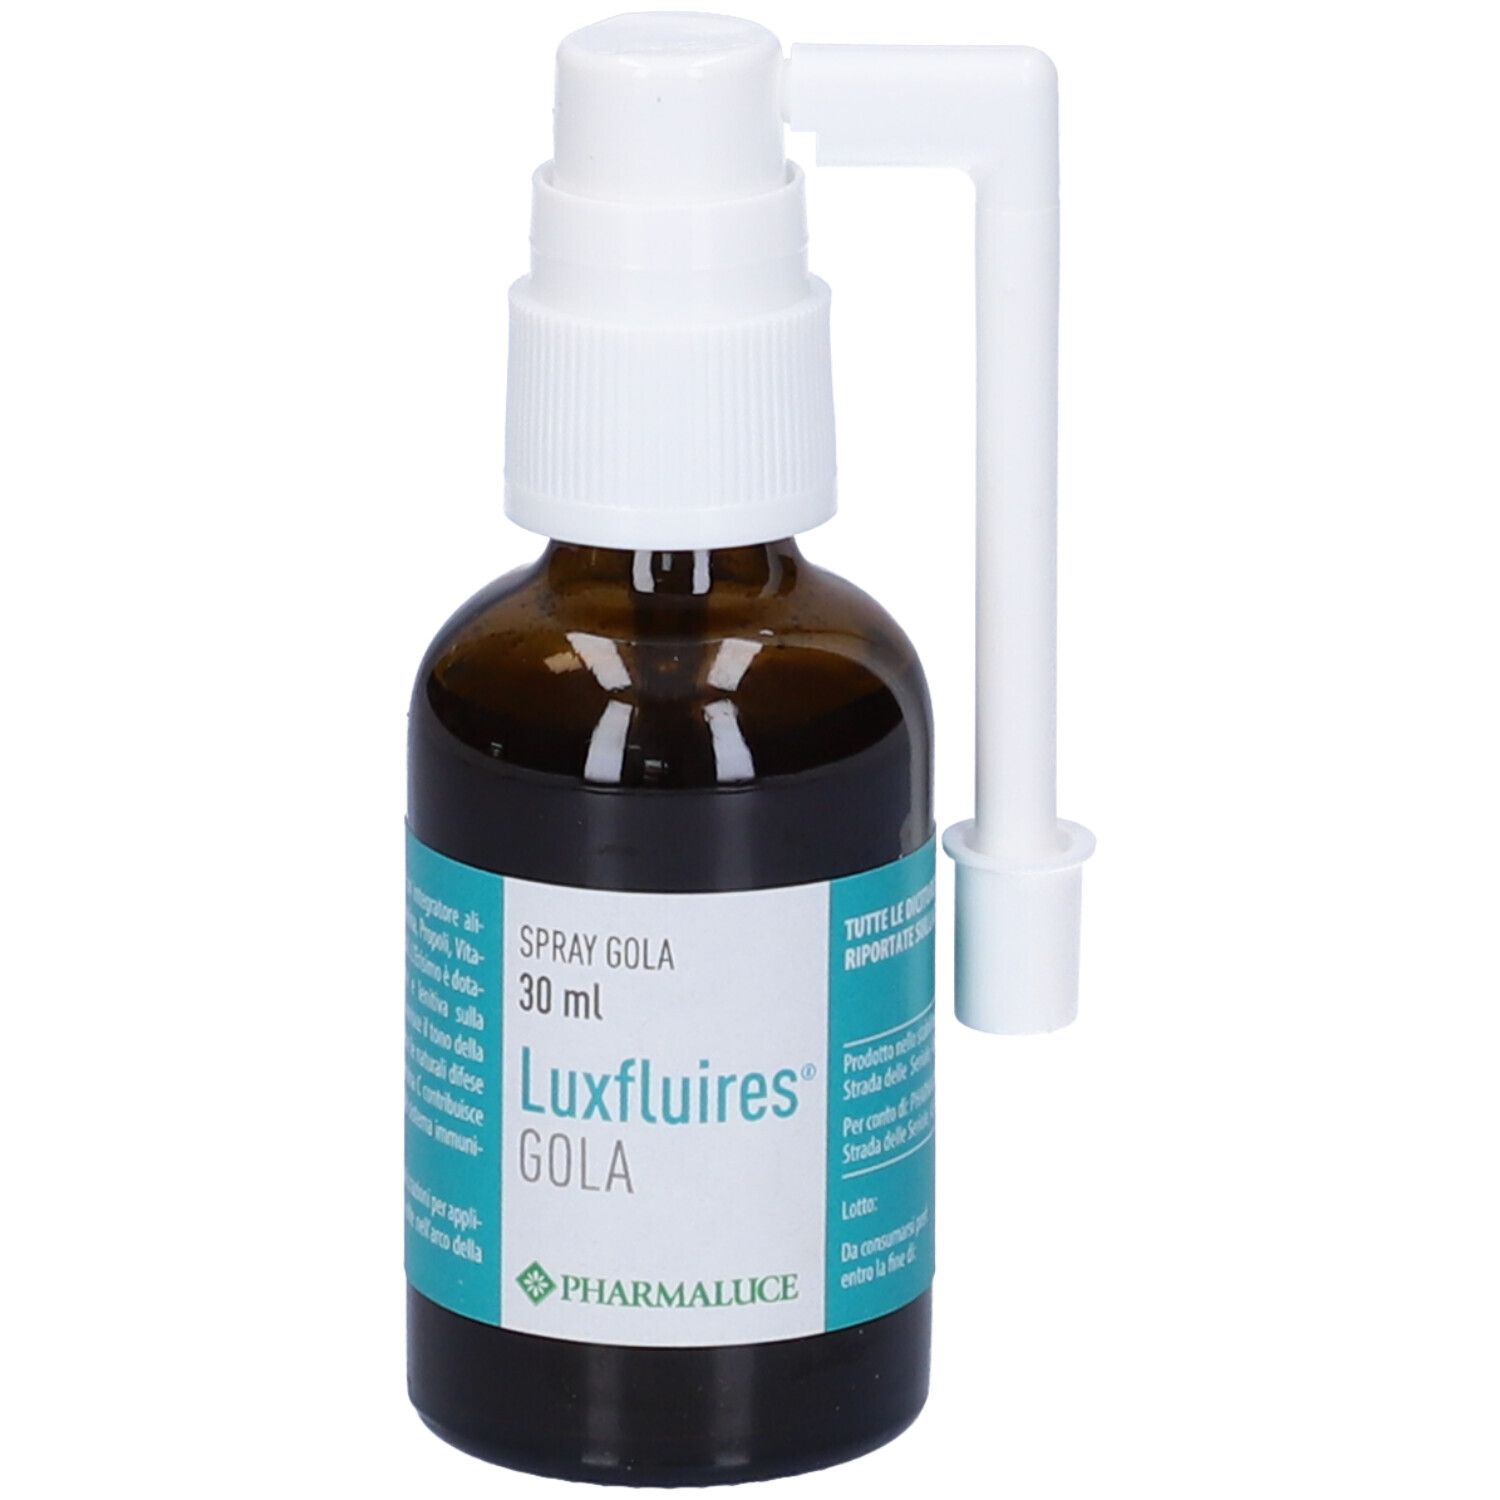 Luxfluires® Gola Spray